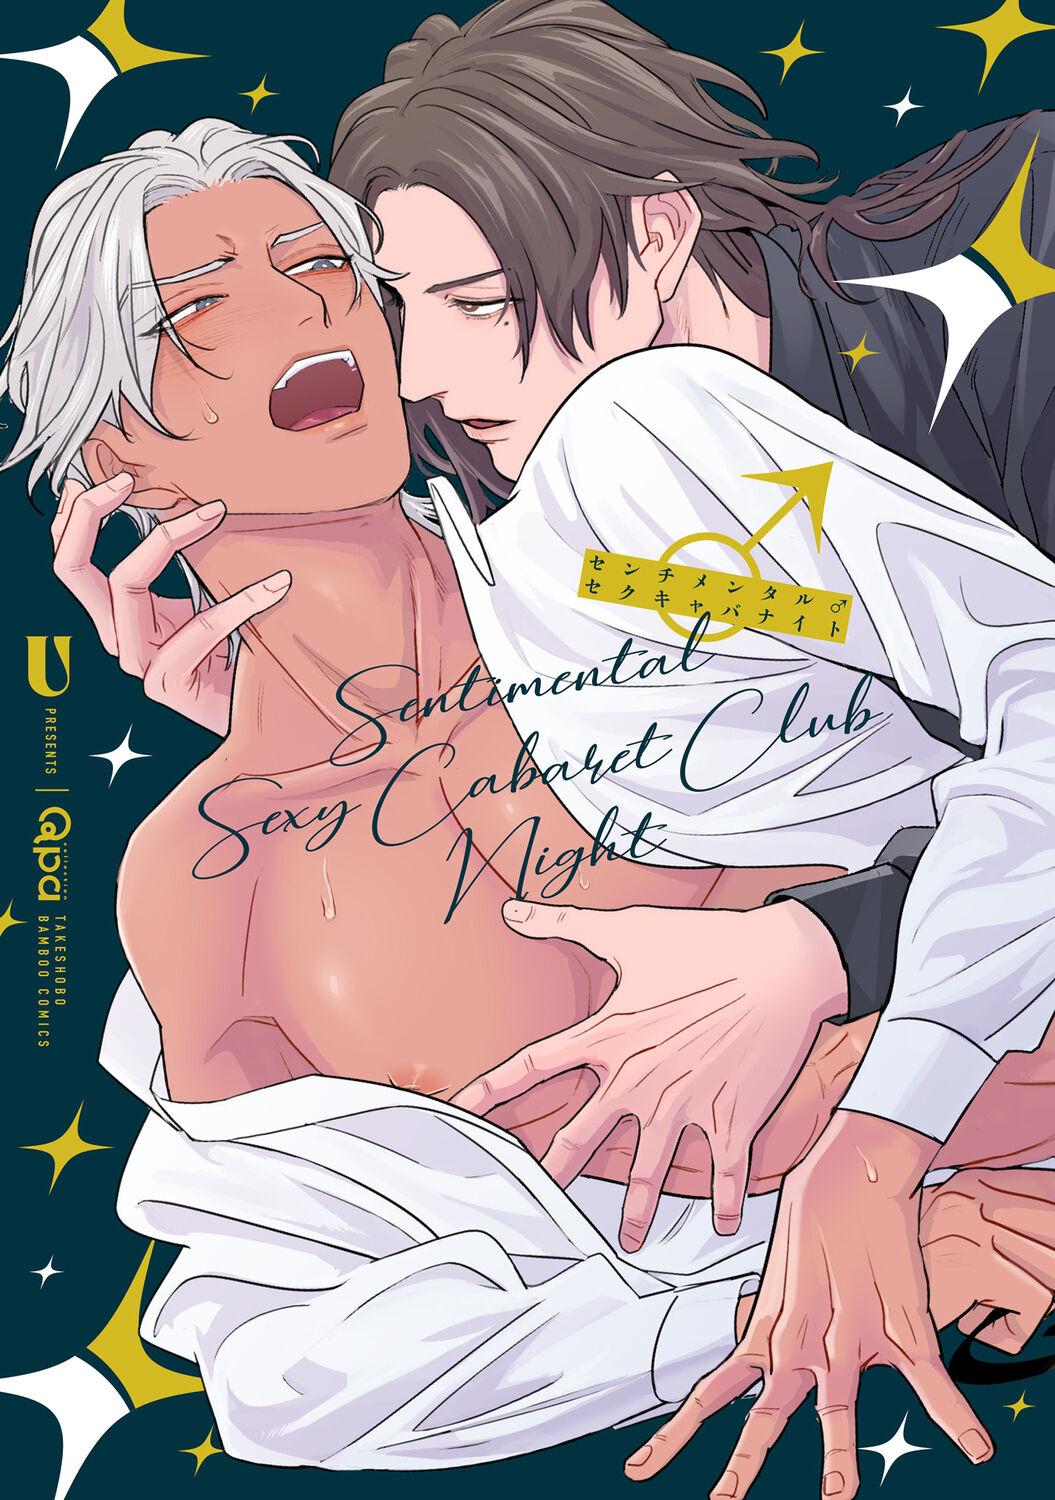 Sentimental SexCaba Night | 意乱情迷♂风俗店之夜 Ch. 1-3 0